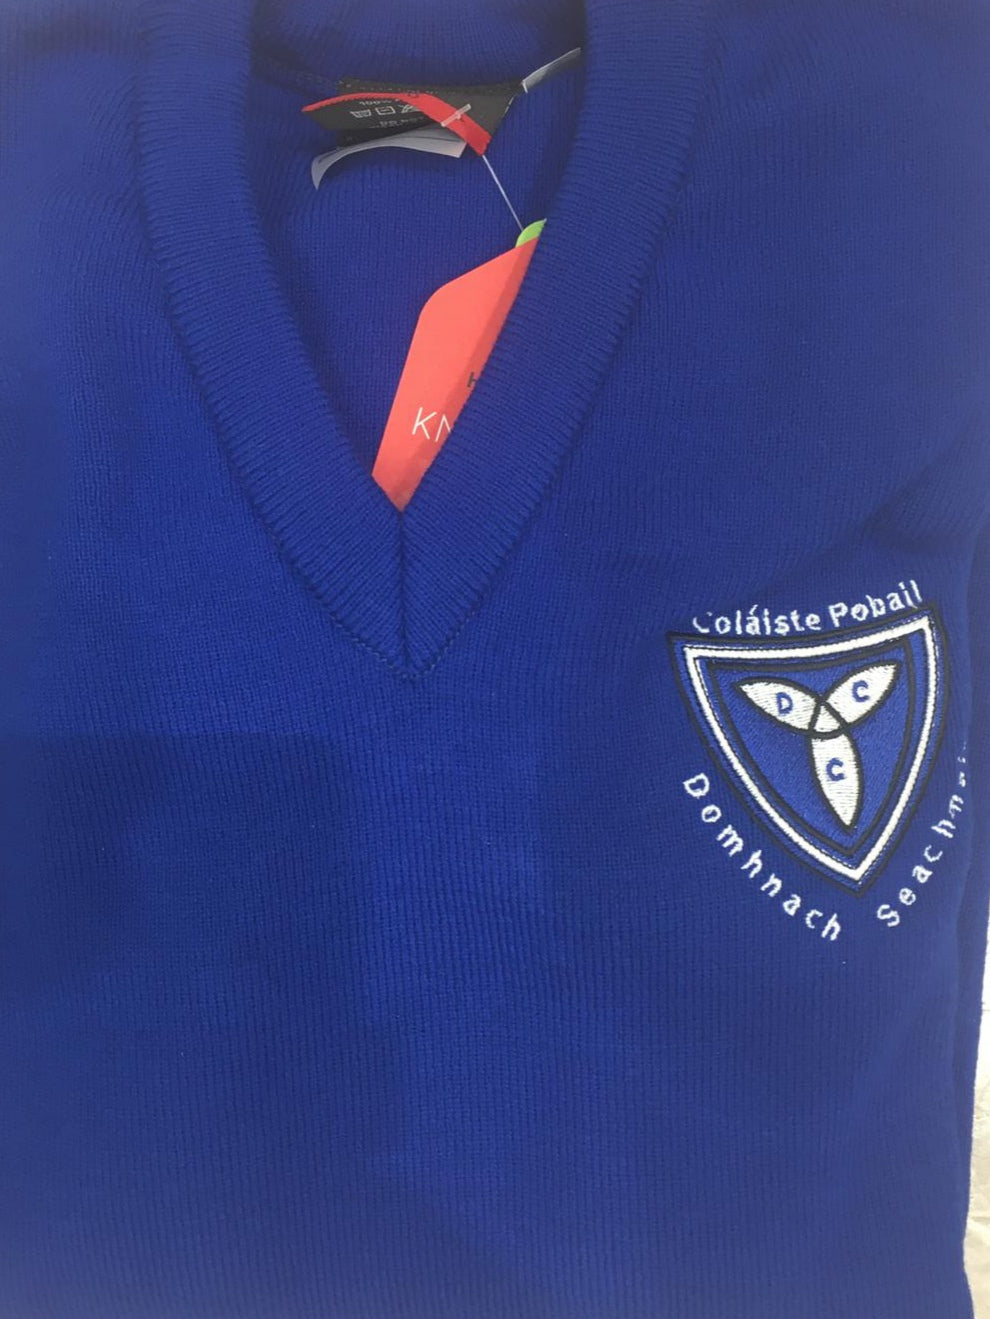 Dunshaughlin Community College - Blue jumper